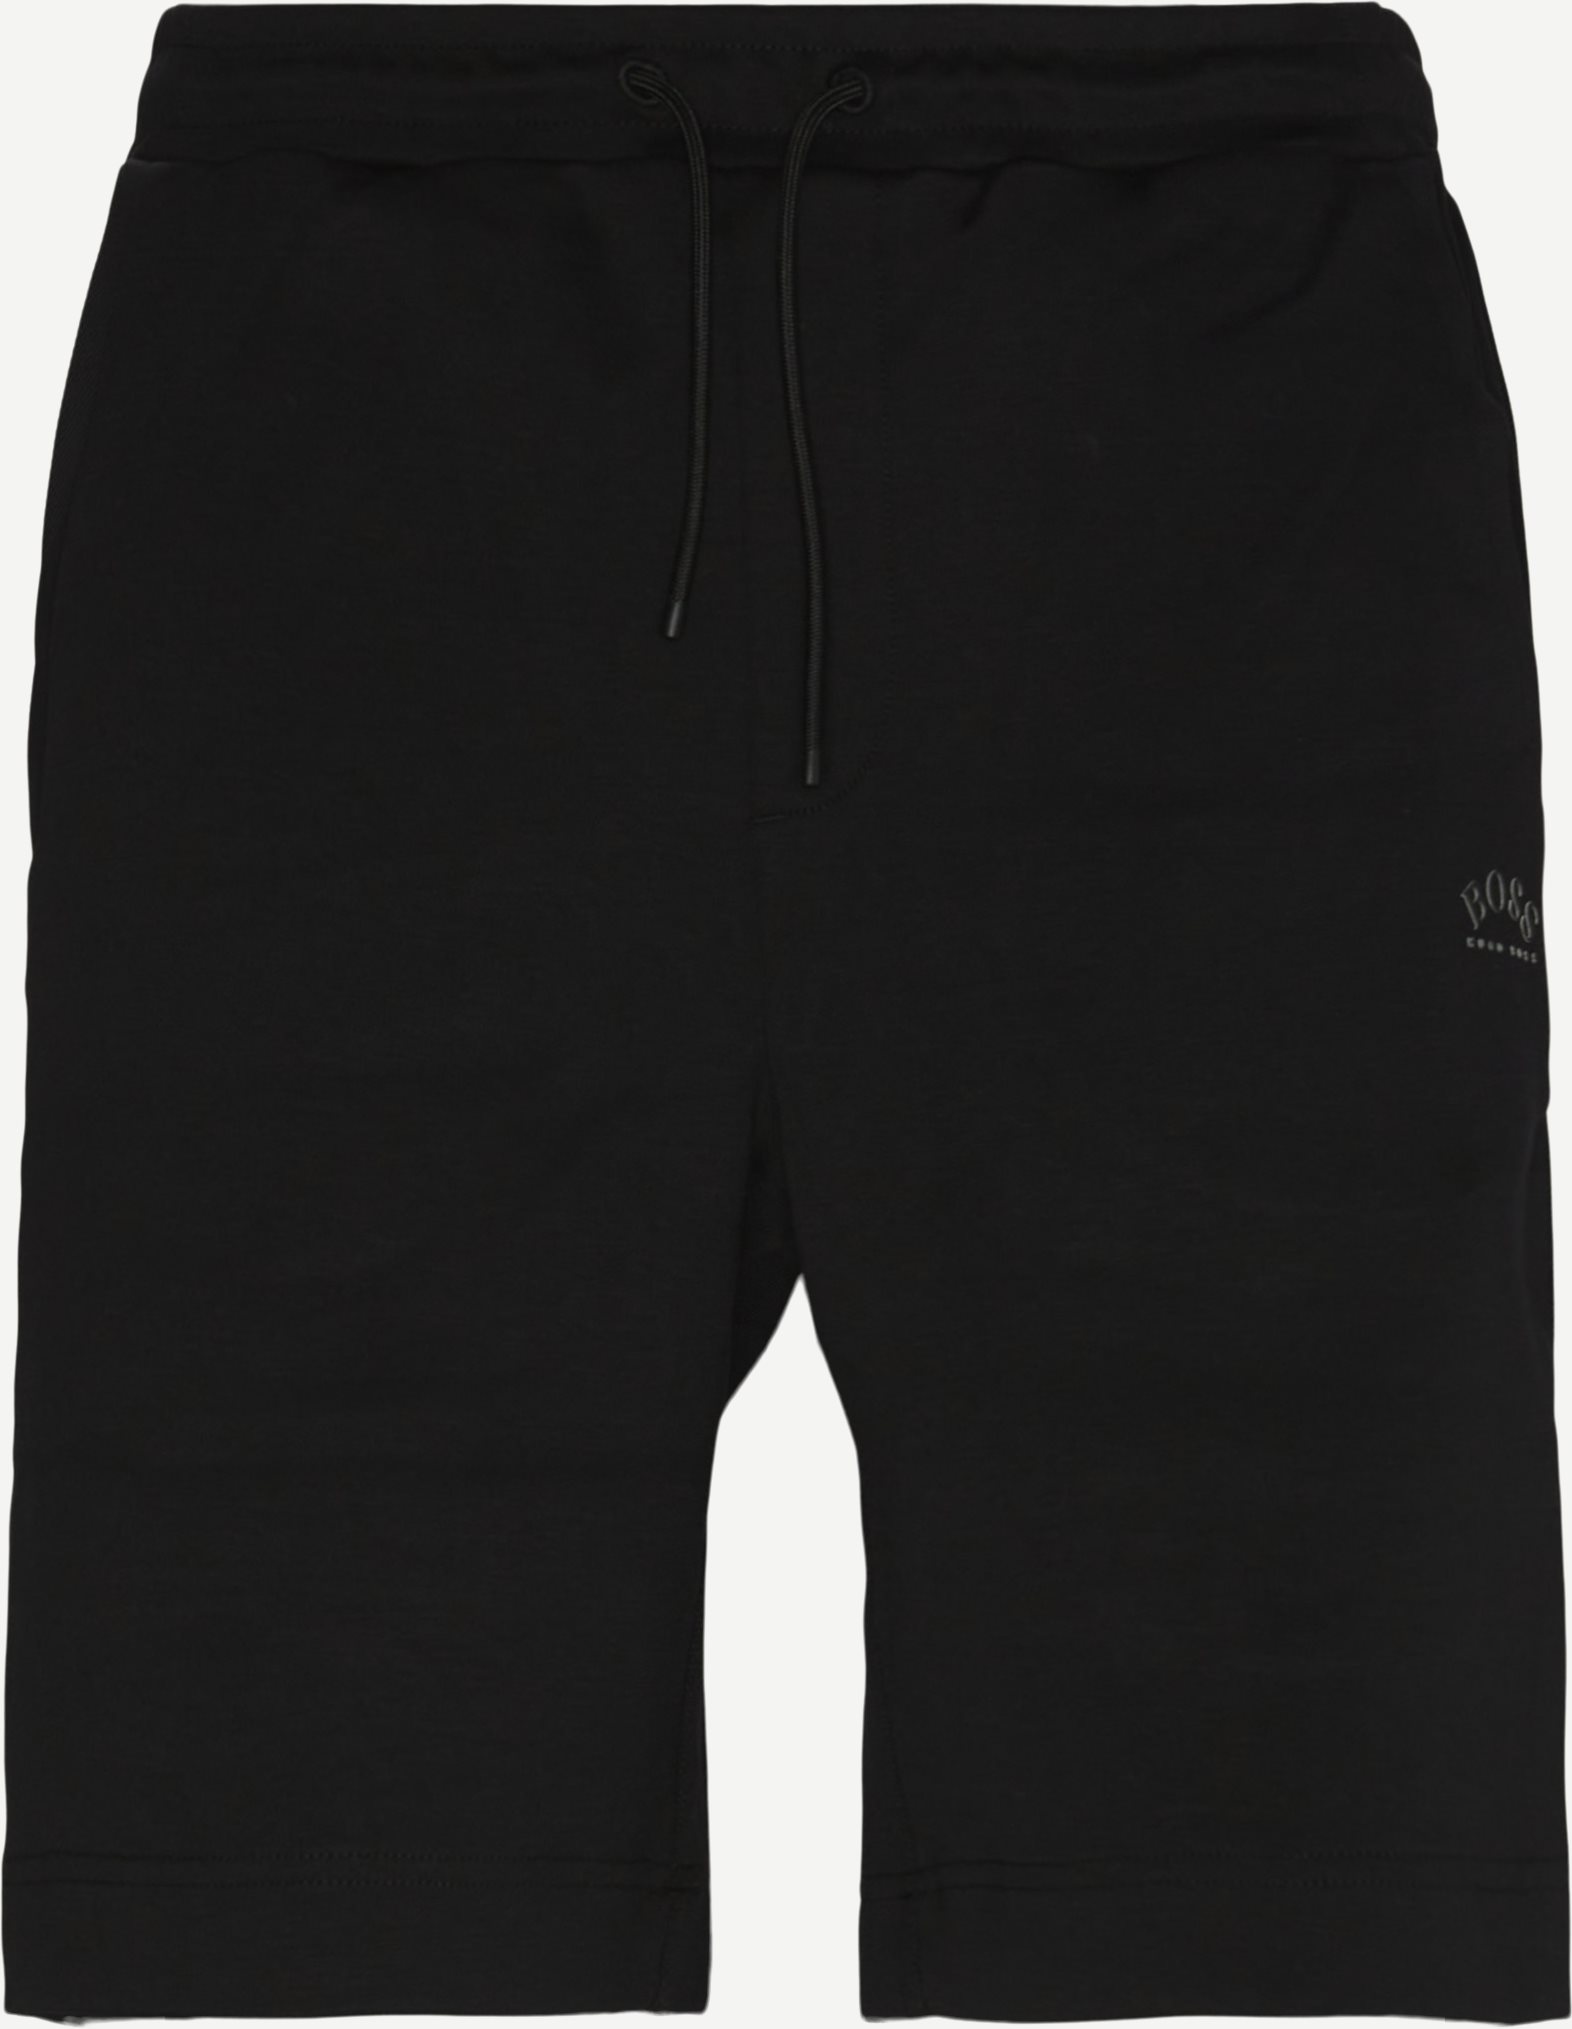 Headlo 2 Sweatshorts - Shorts - Regular fit - Schwarz